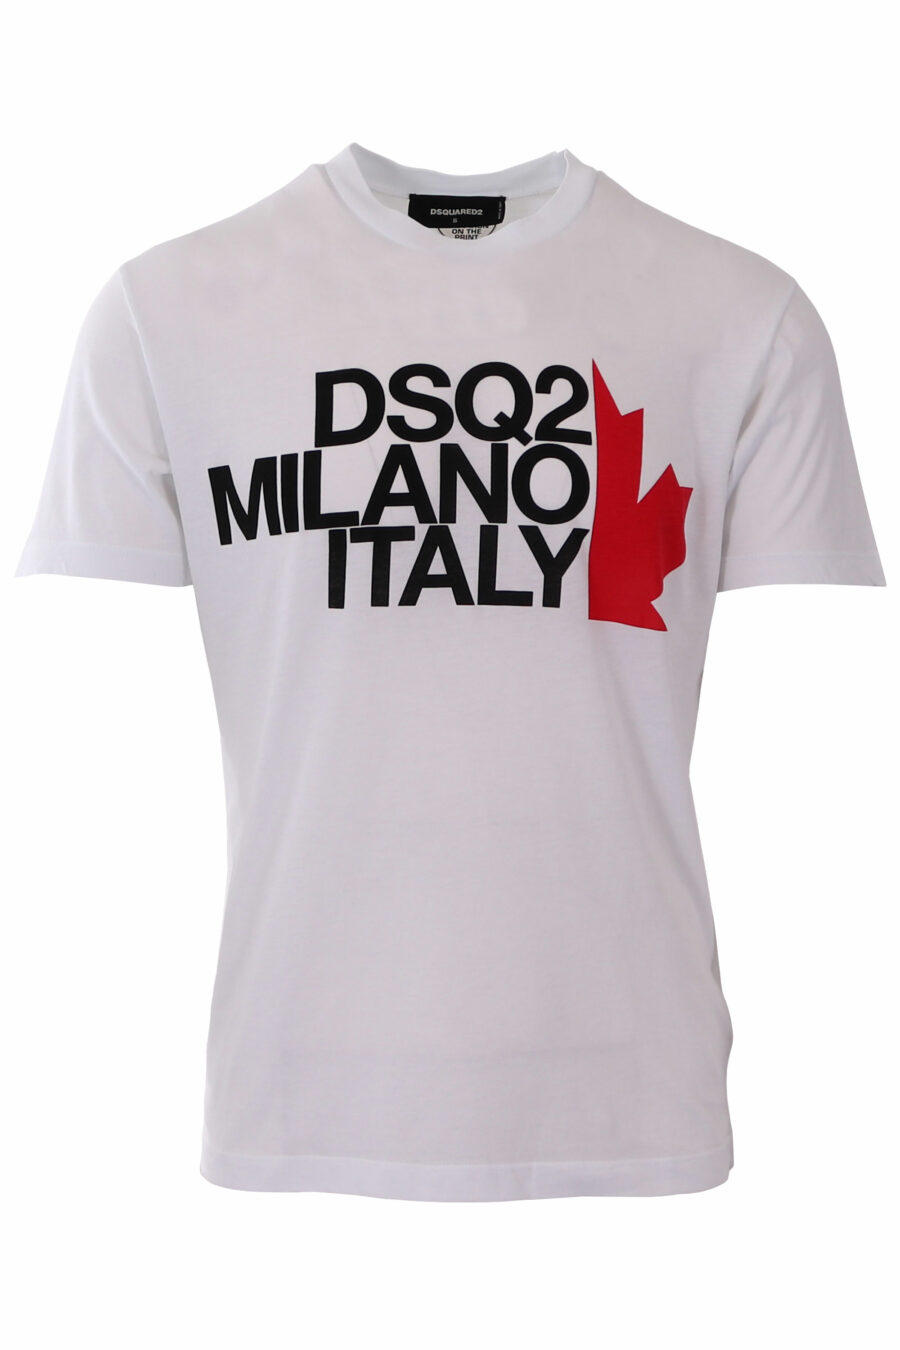 Weißes T-Shirt mit Maxilogo "milano italy" - IMG 1842